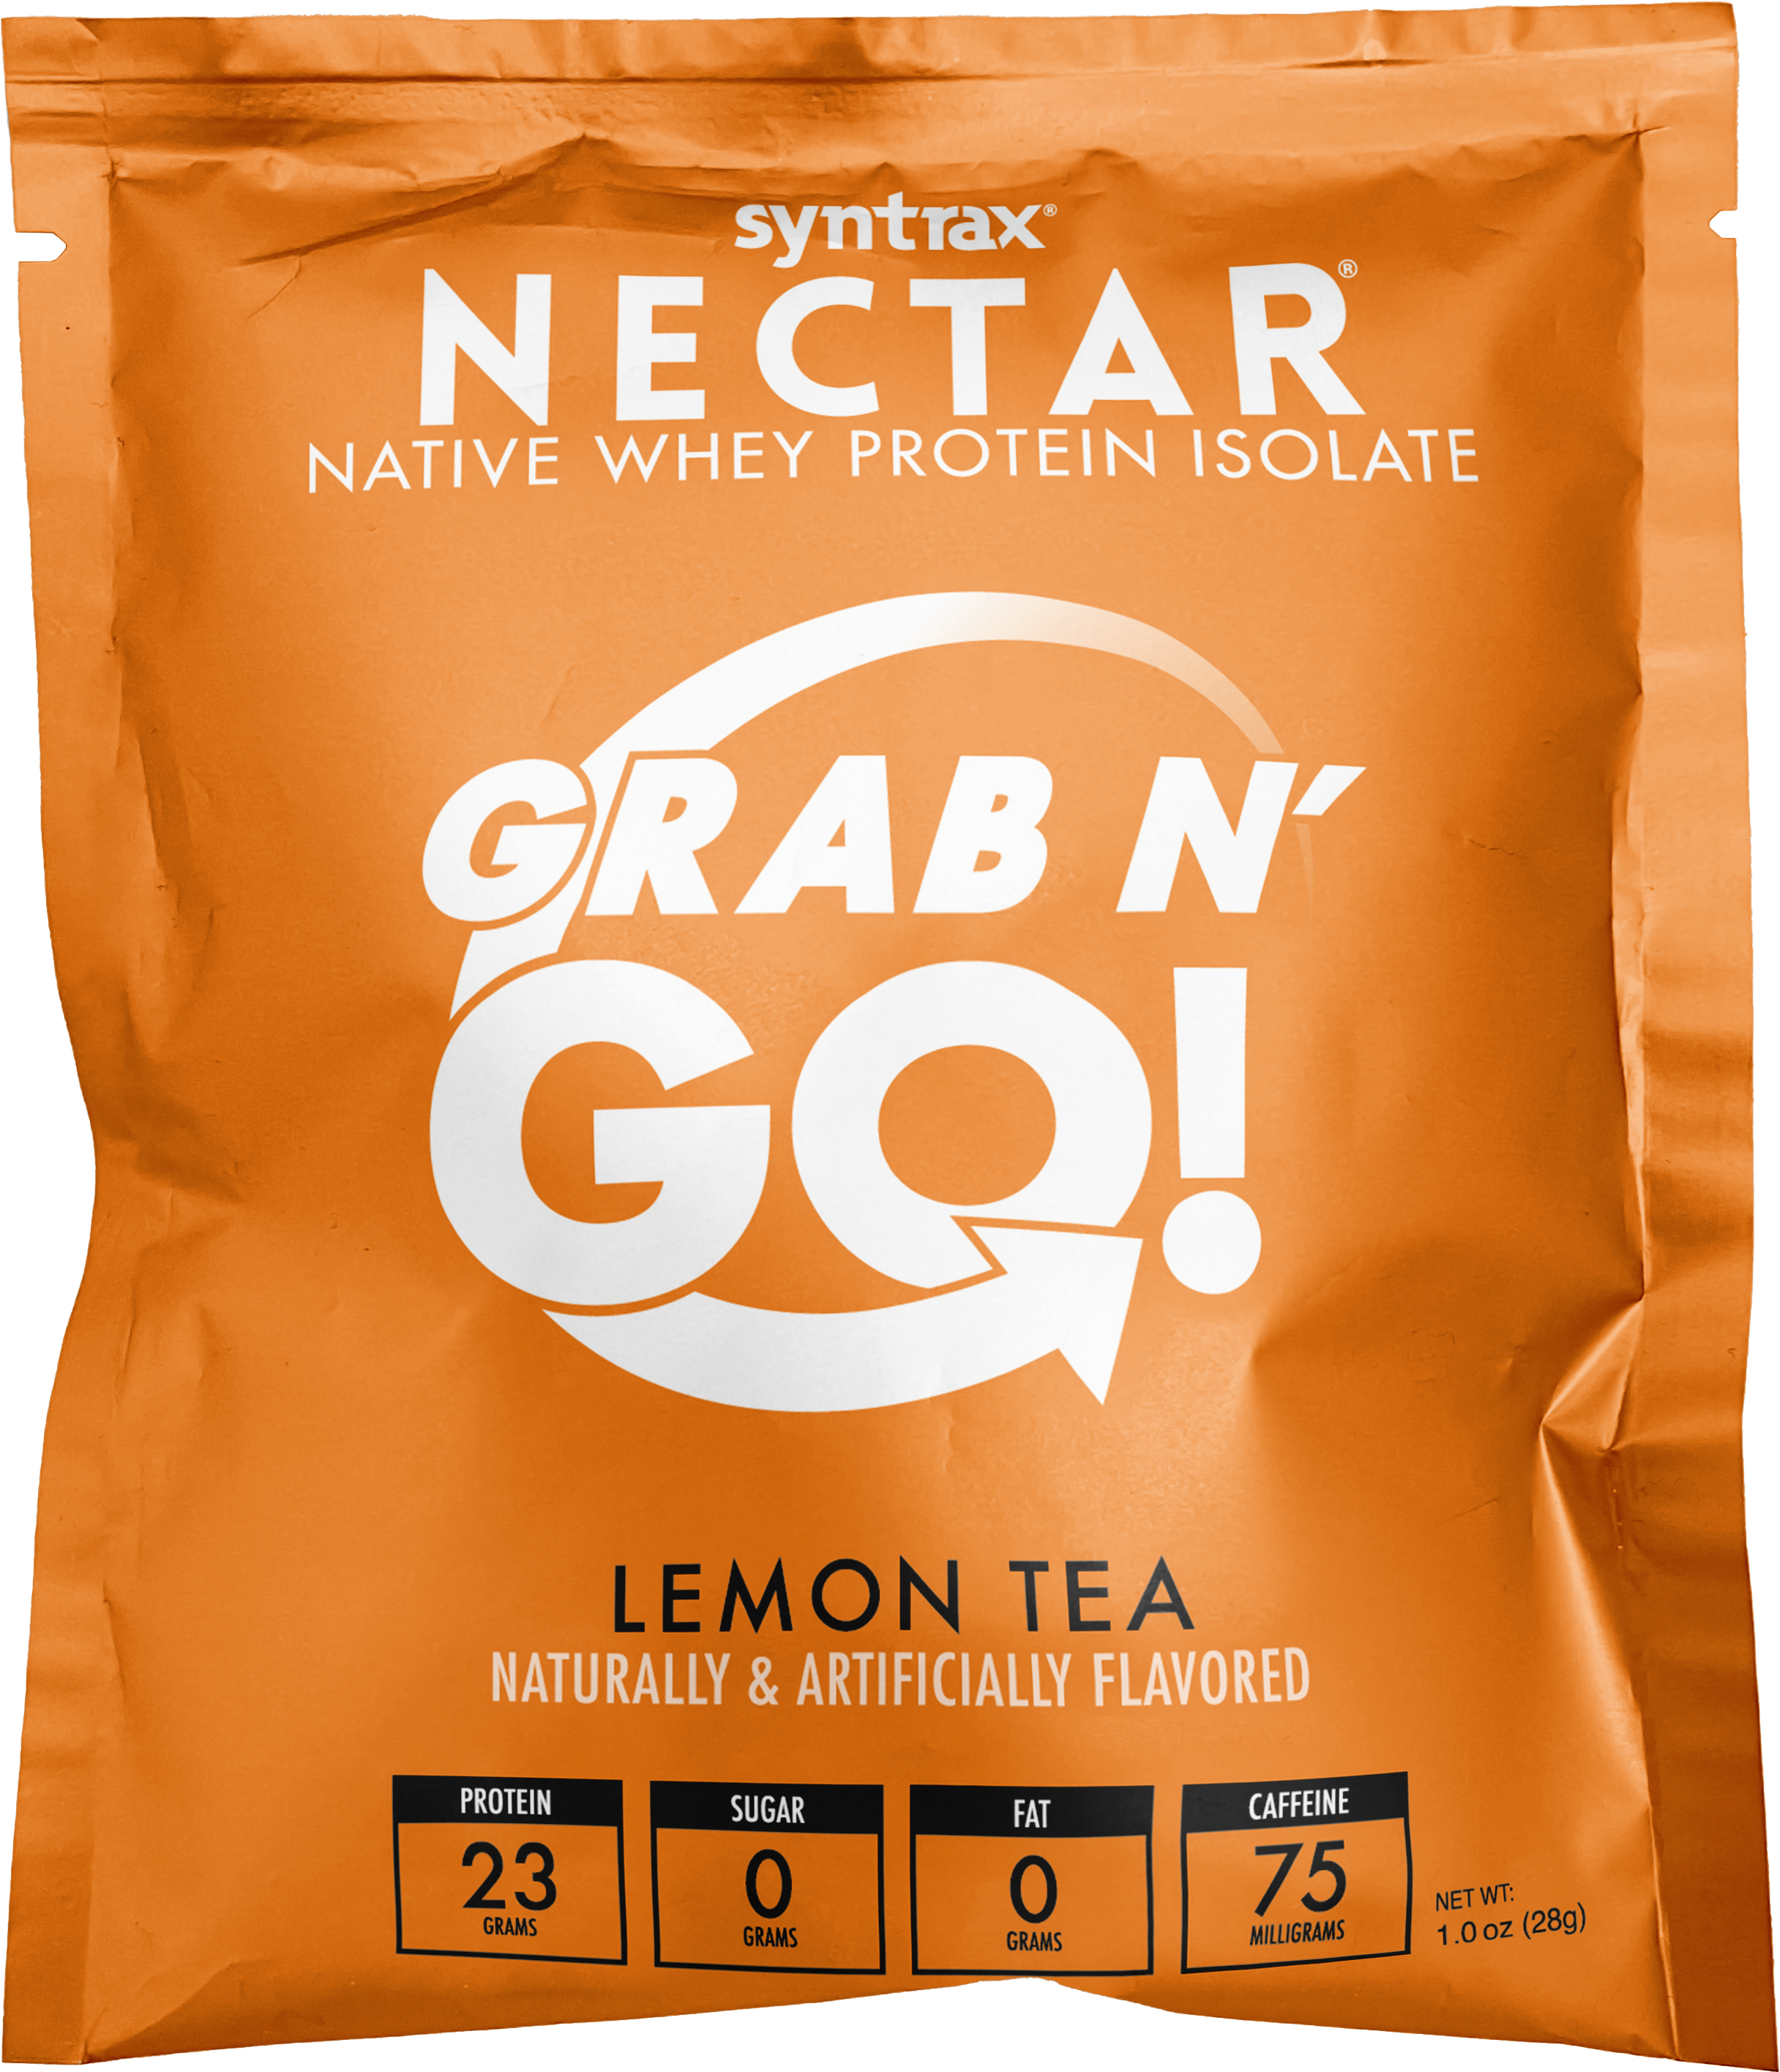 Syntrax Nectar Protein Powder Grab N' Go Box - Lemon Tea